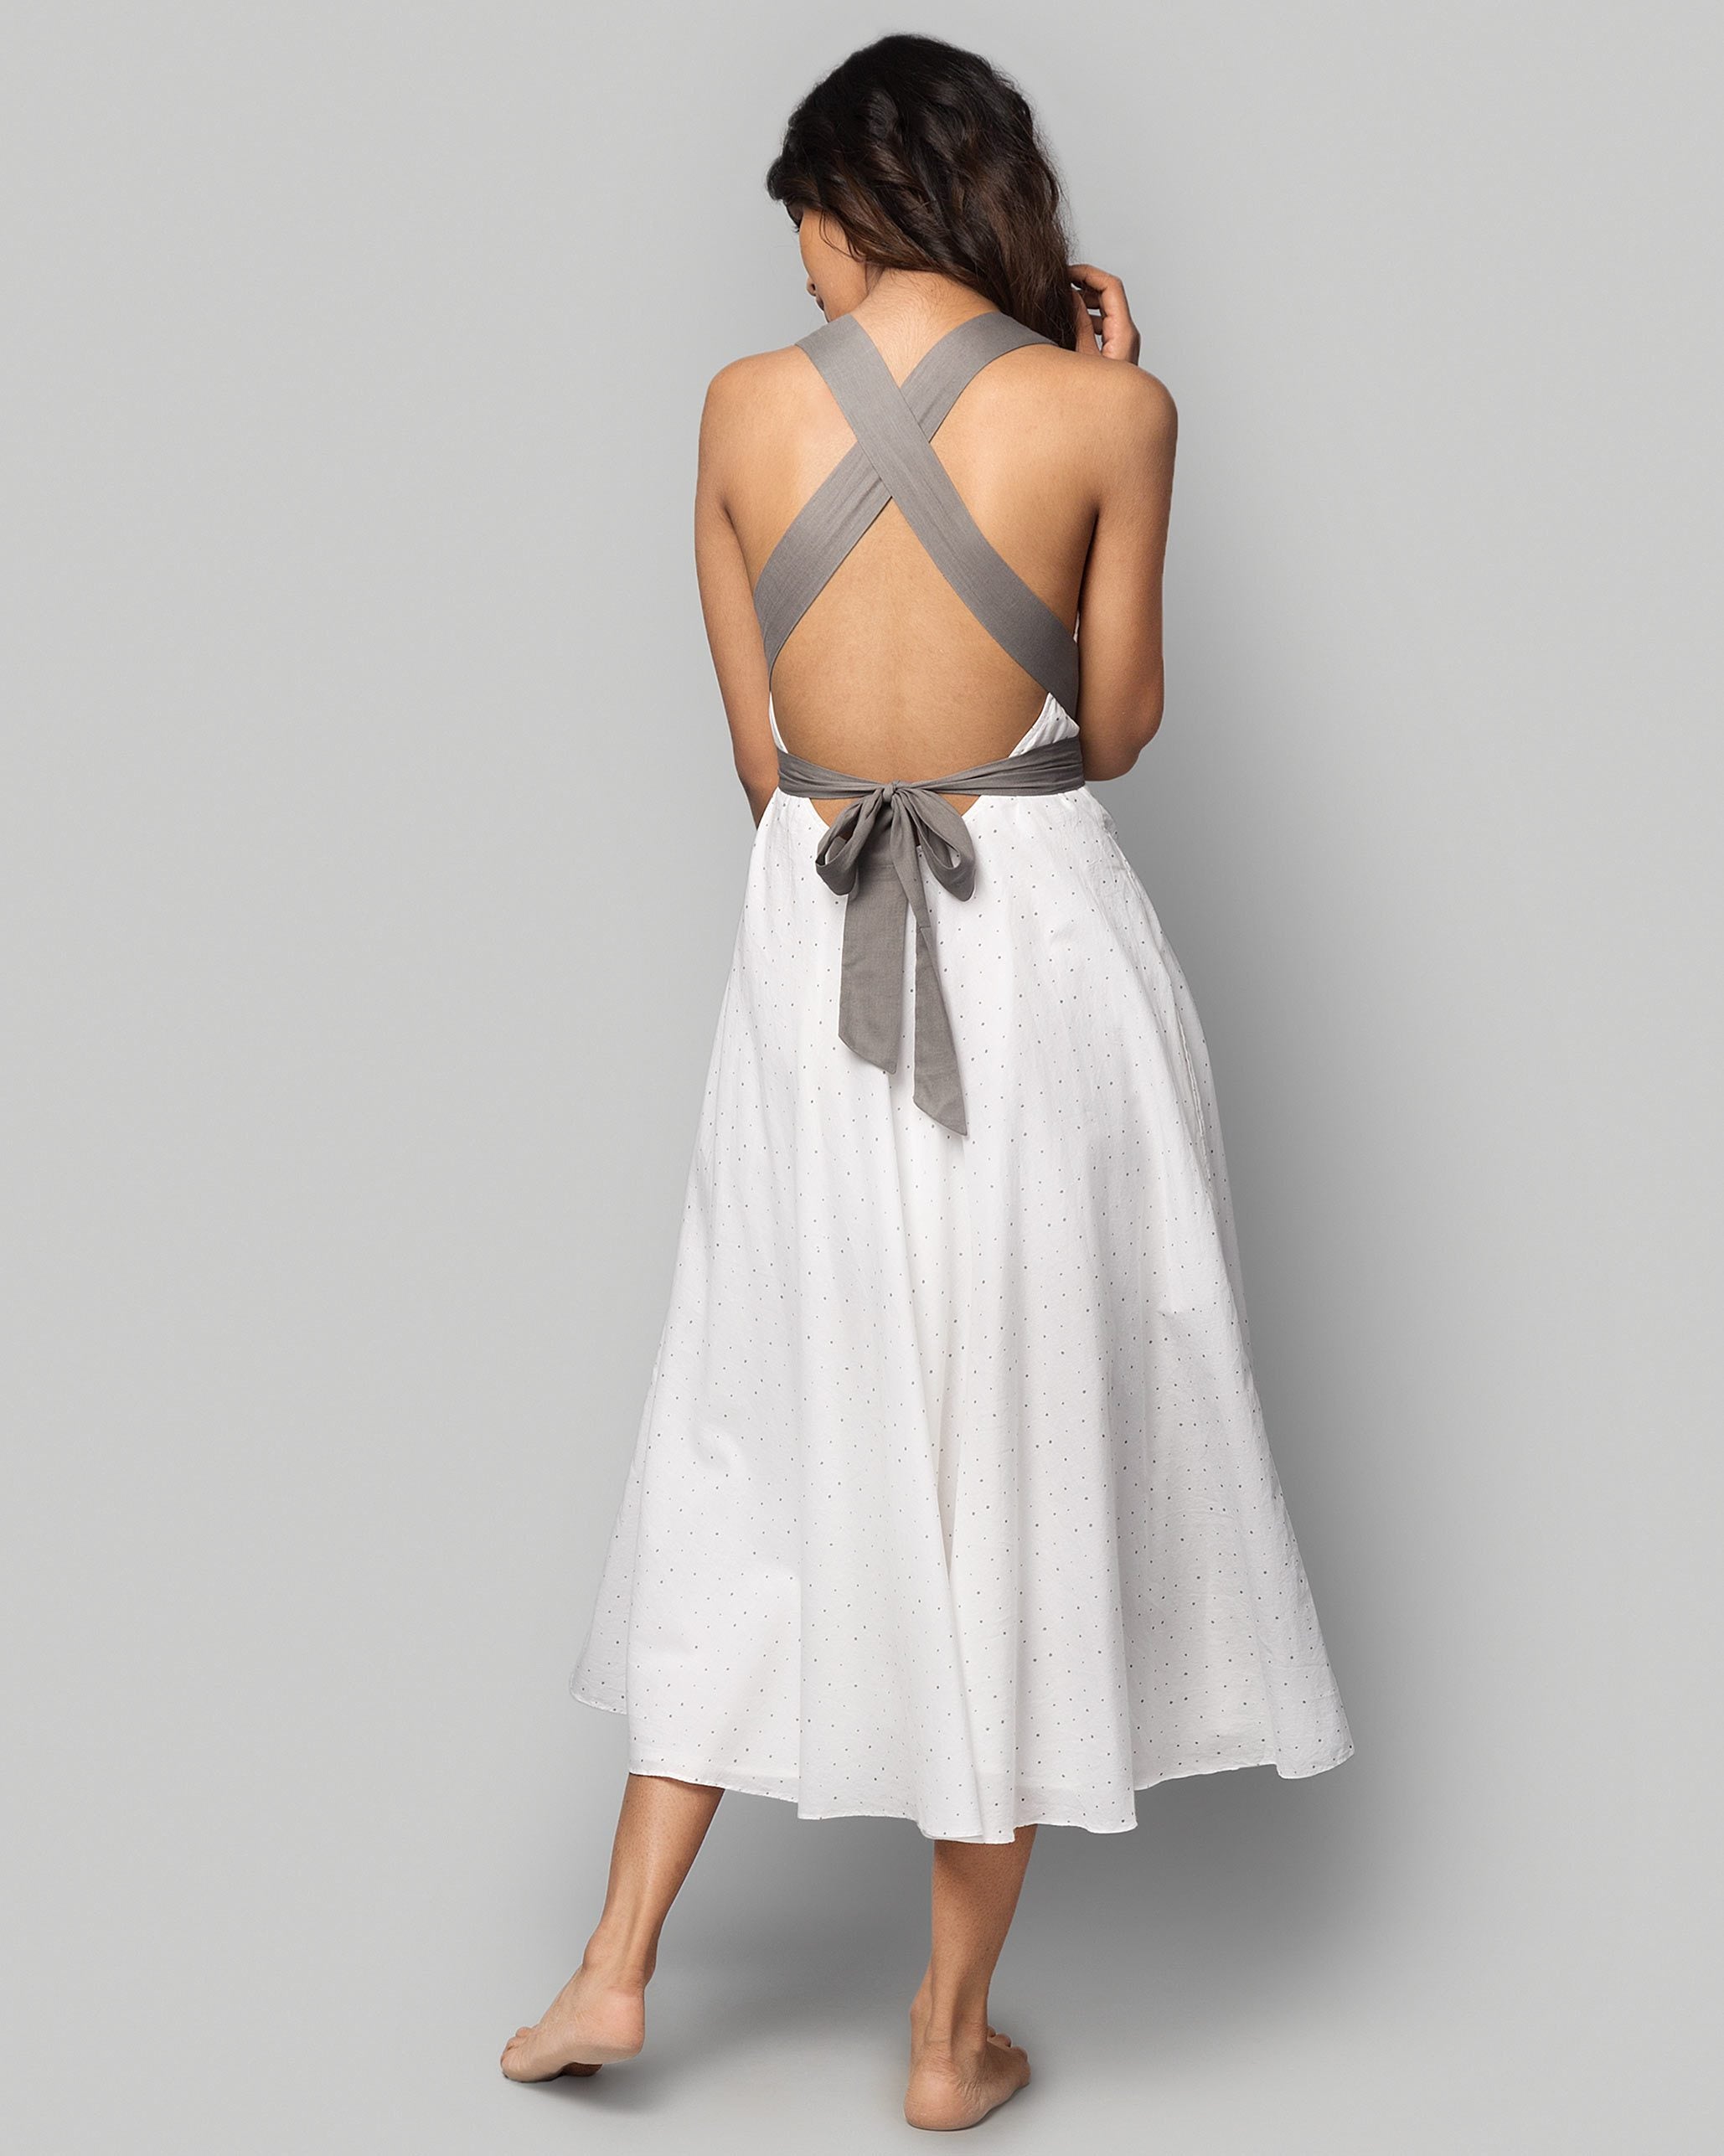 Portofino Back-tie Dress